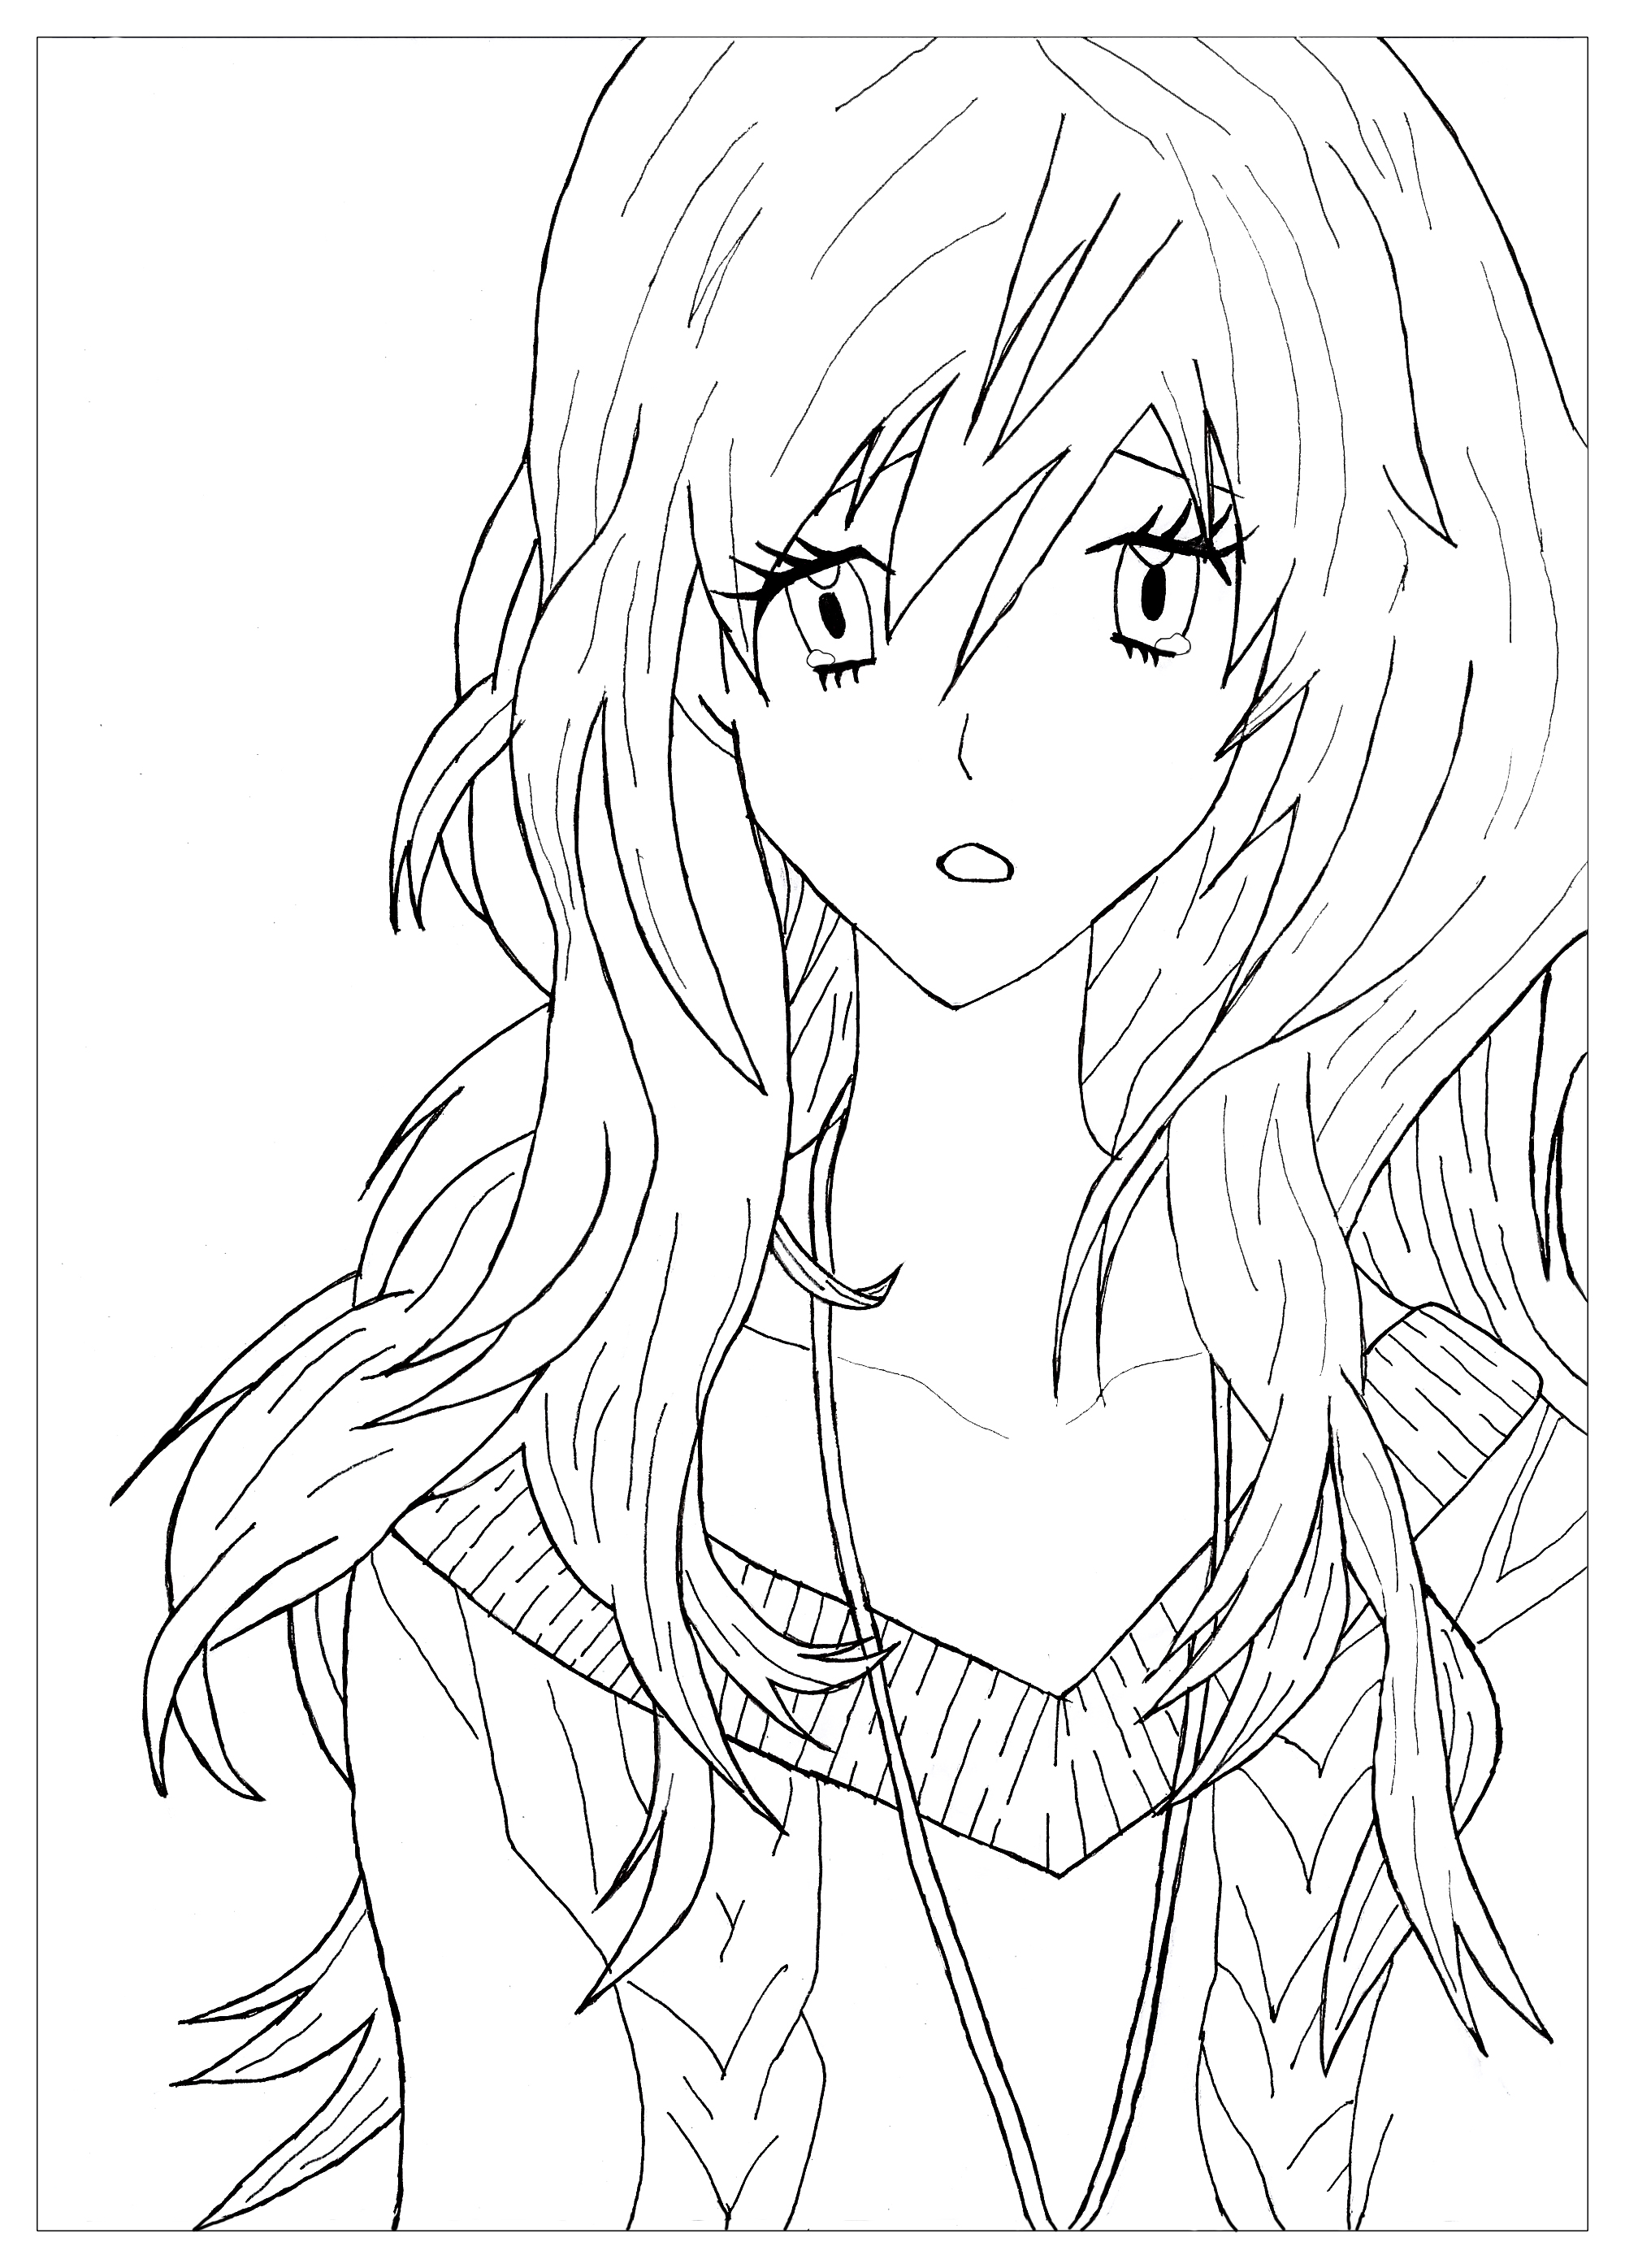 Manga / Anime coloring page representing a sad girl, Artist : Krissy